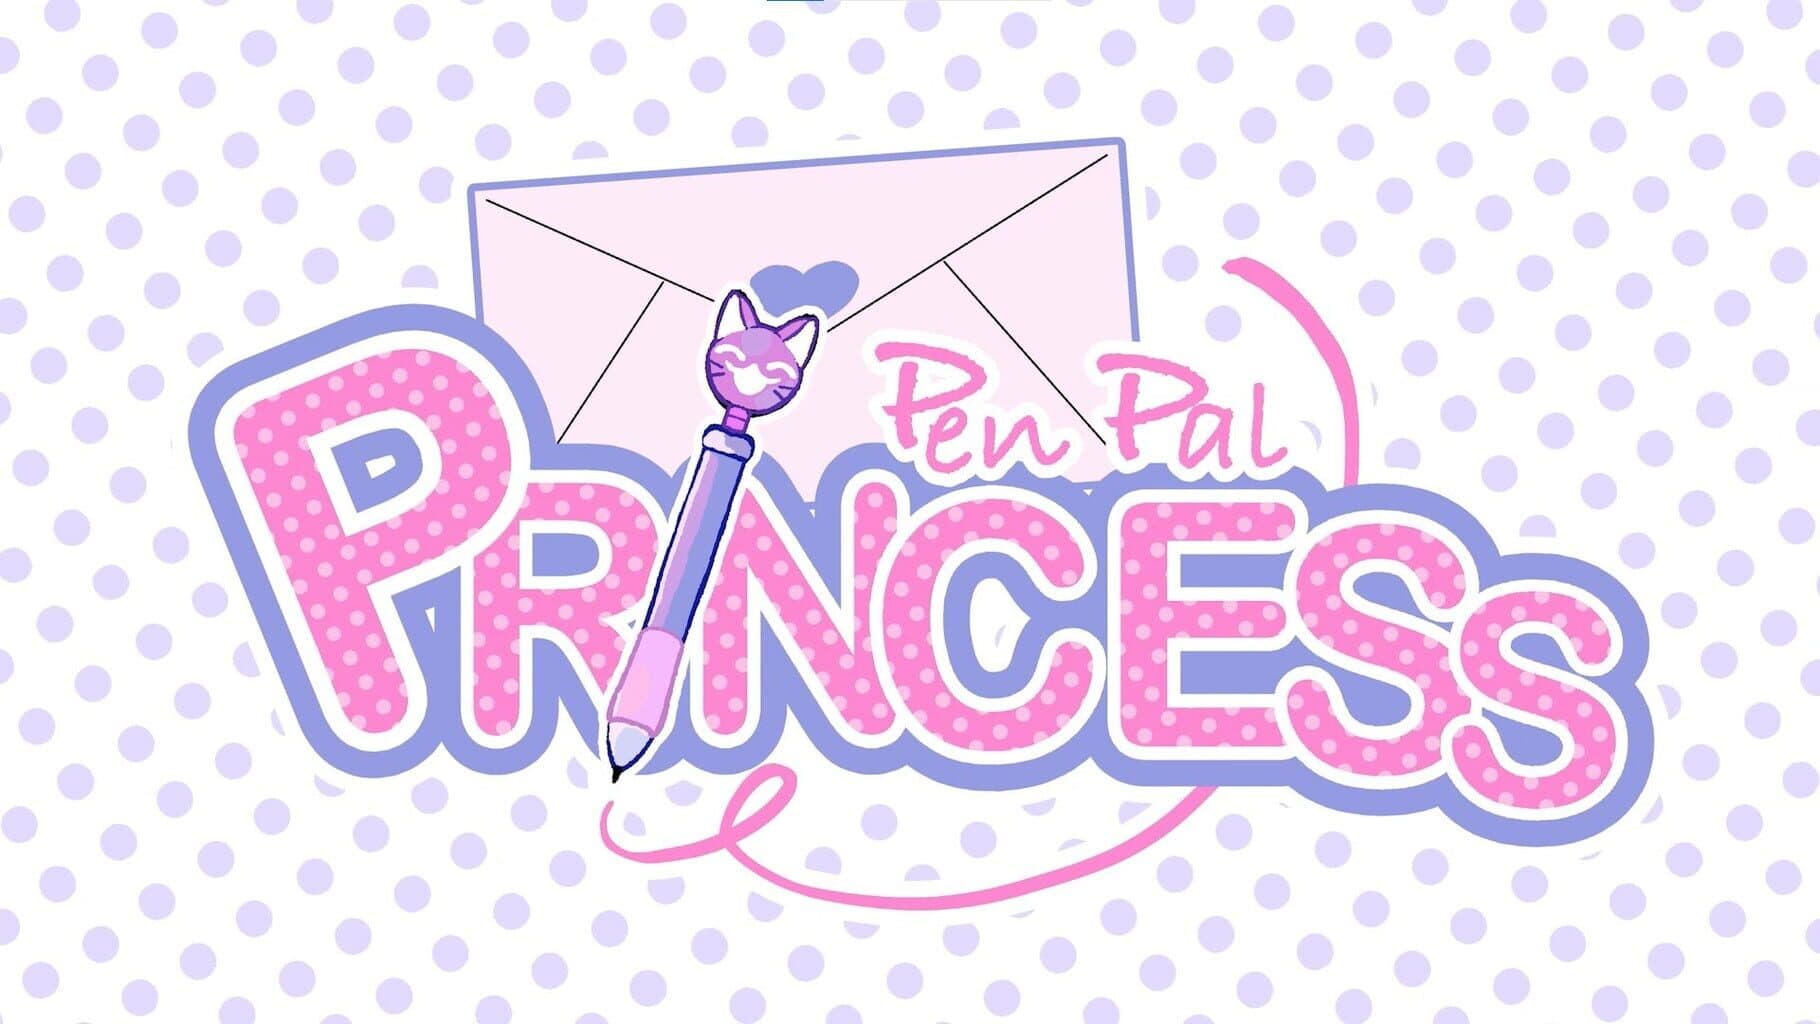 Pen Pal Princess Image